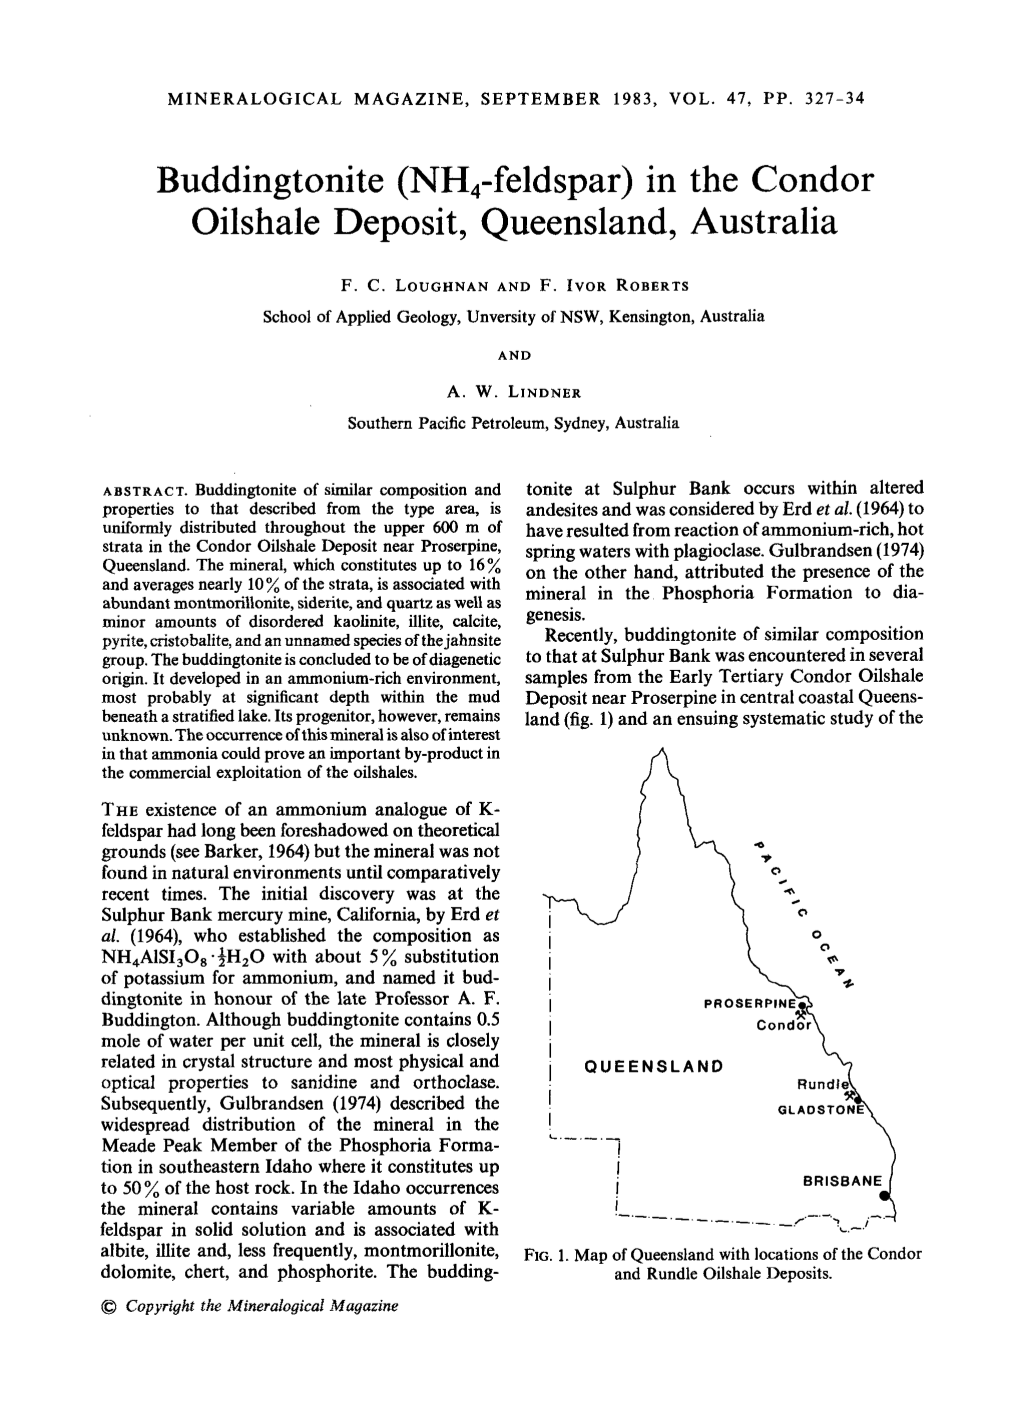 Buddingtonite (NH4-Feldspar) in the Condor Oilshale Deposit, Queensland, Australia